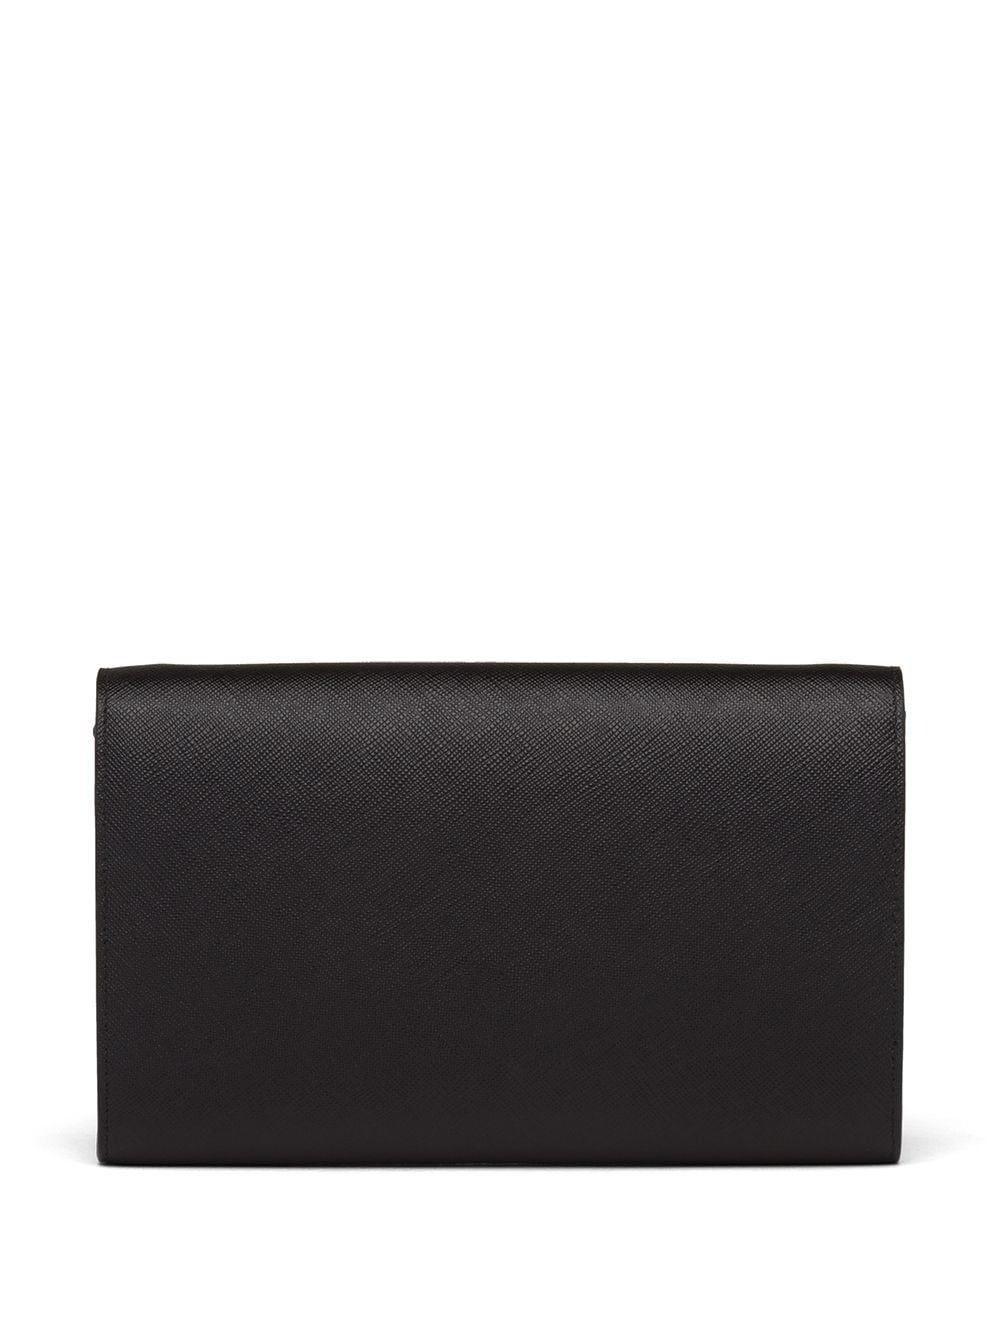 Prada Saffiano Leather Wallet With Shoulder Strap in Black